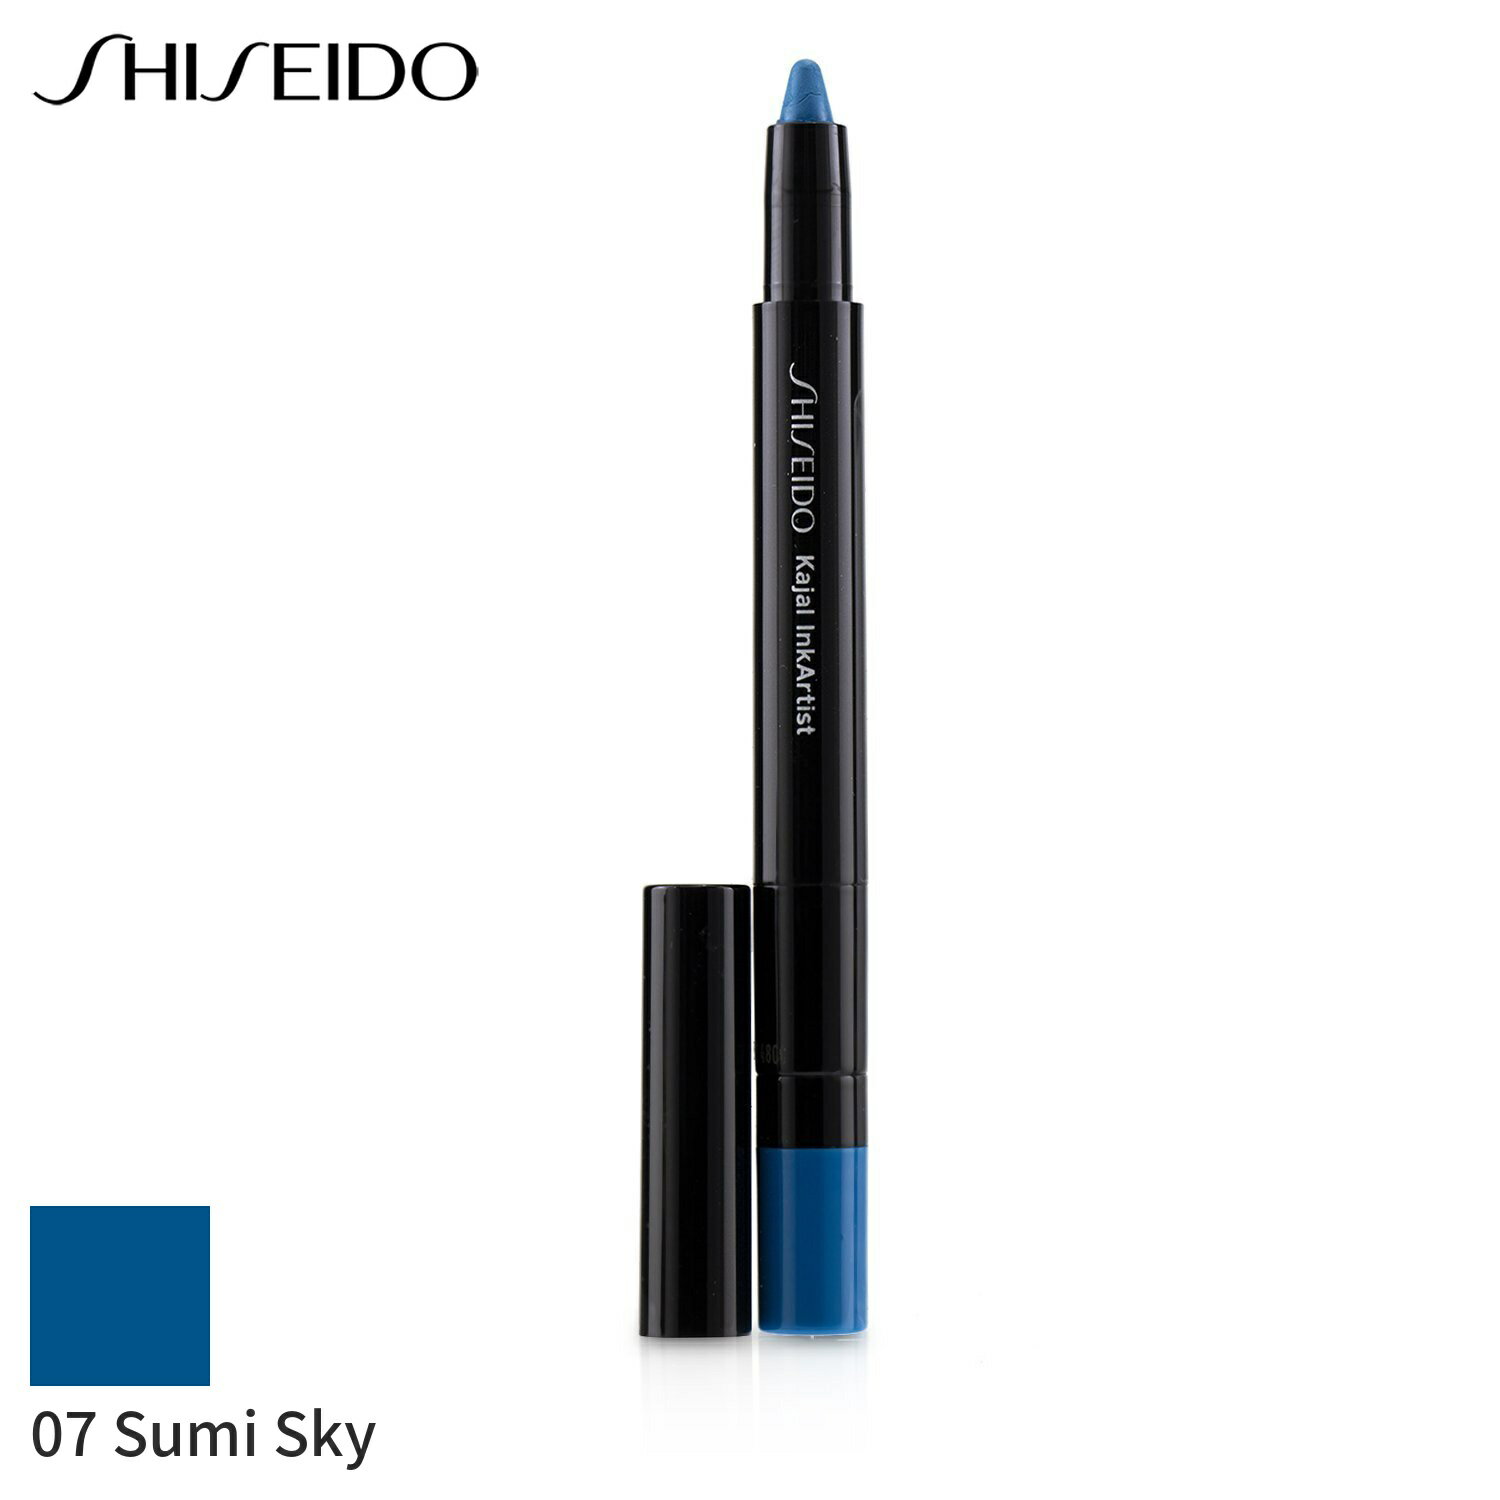  ACCi[ Shiseido Jn CNA[eBXg (Vh[, Ci[, uE) - # 07 Sumi Sky (Teal) 0.8g CNAbv AC ̓ v[g Mtg 2024 lC uh RX